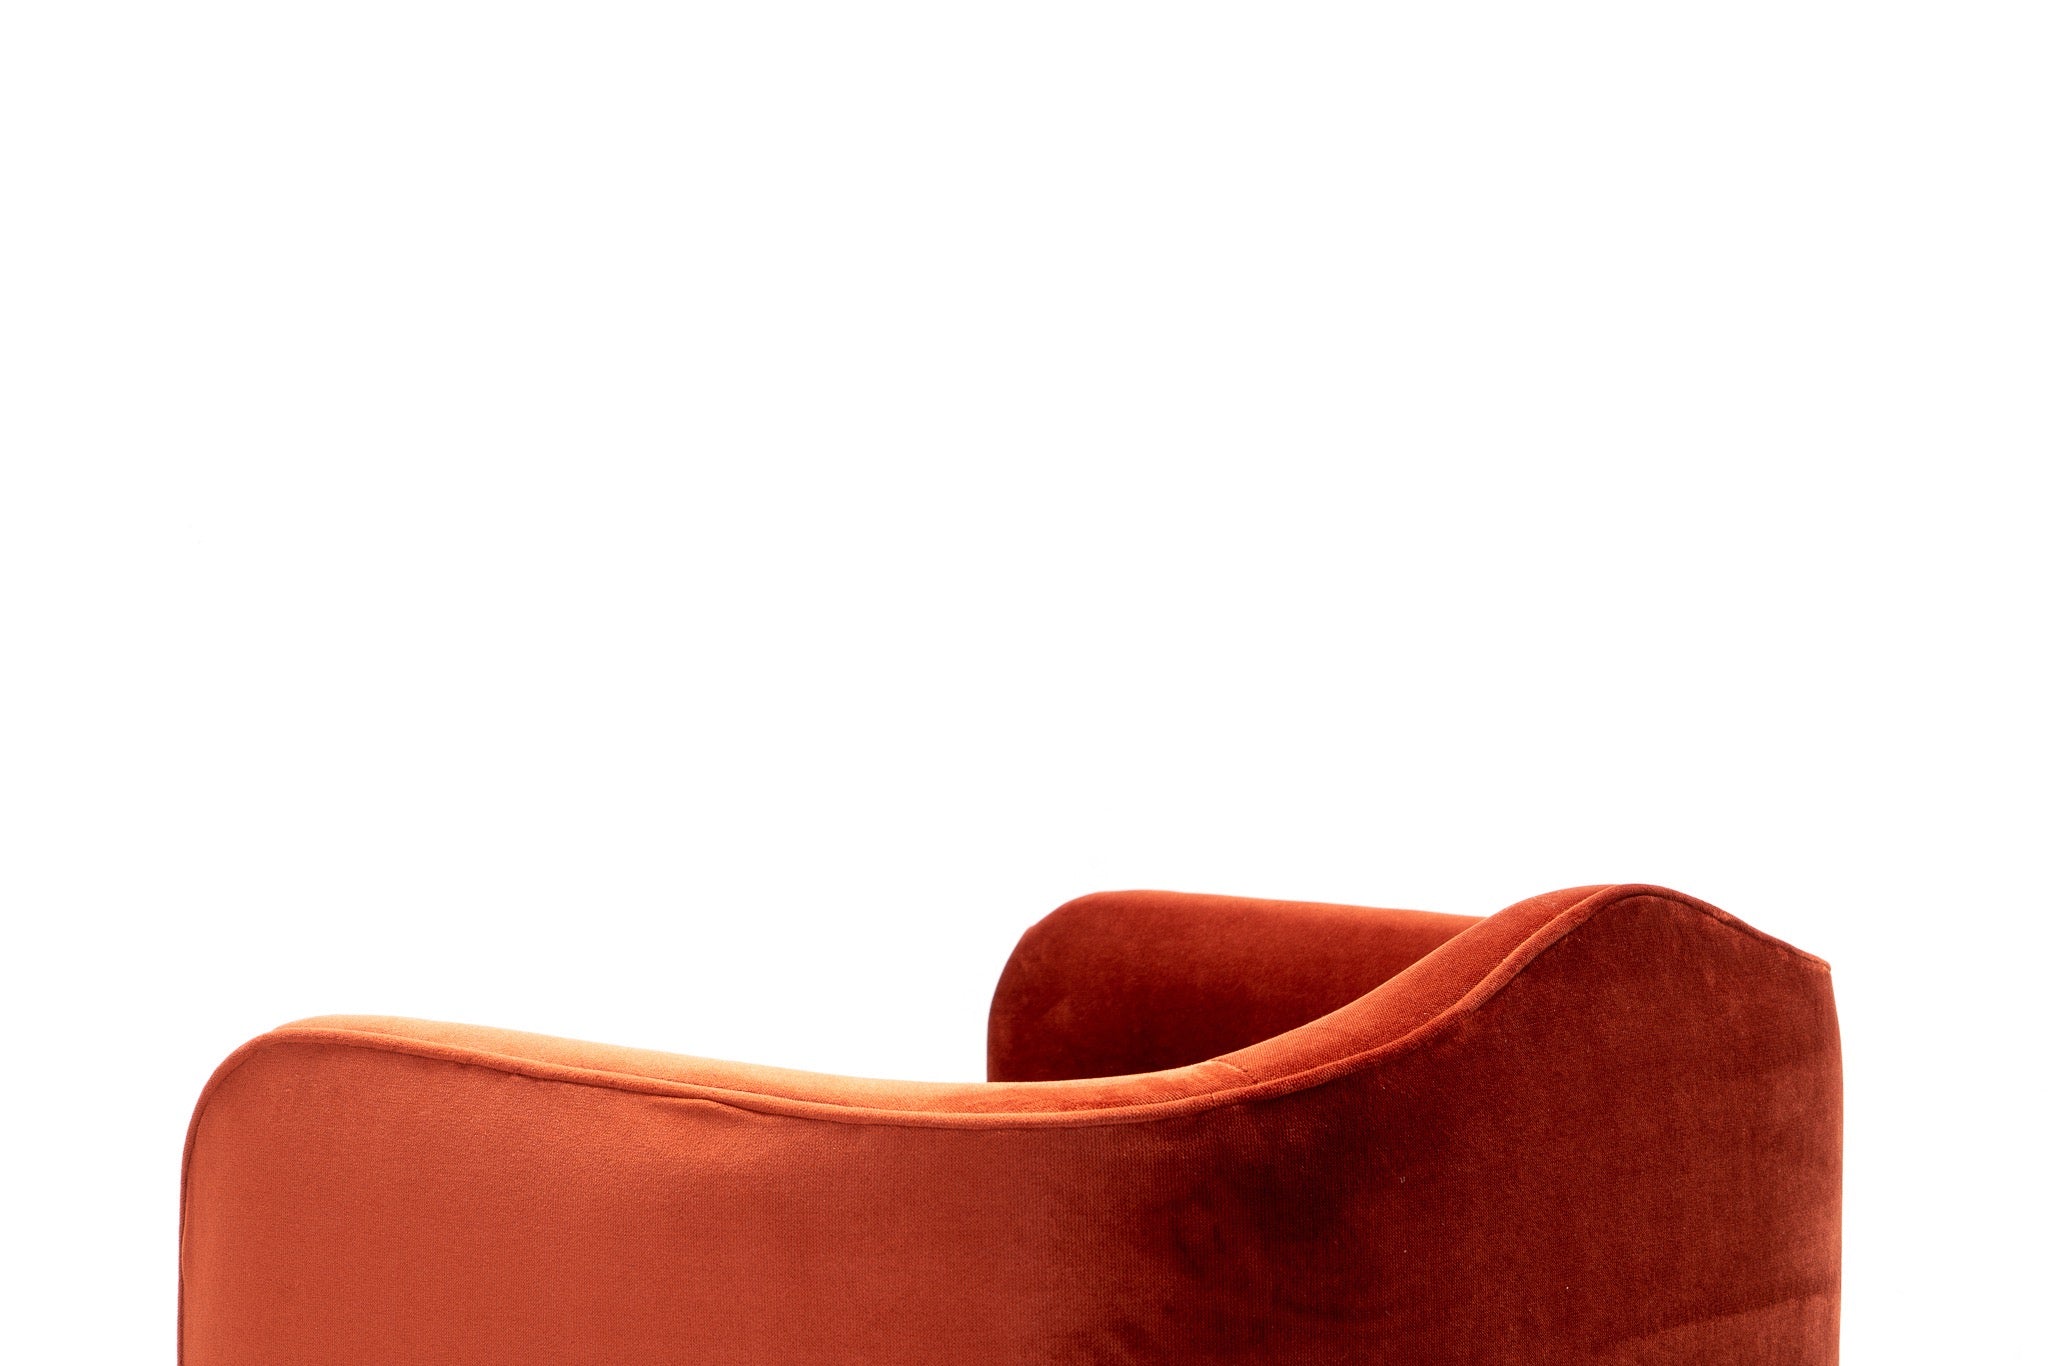 Custom "Deco" Accent Chair